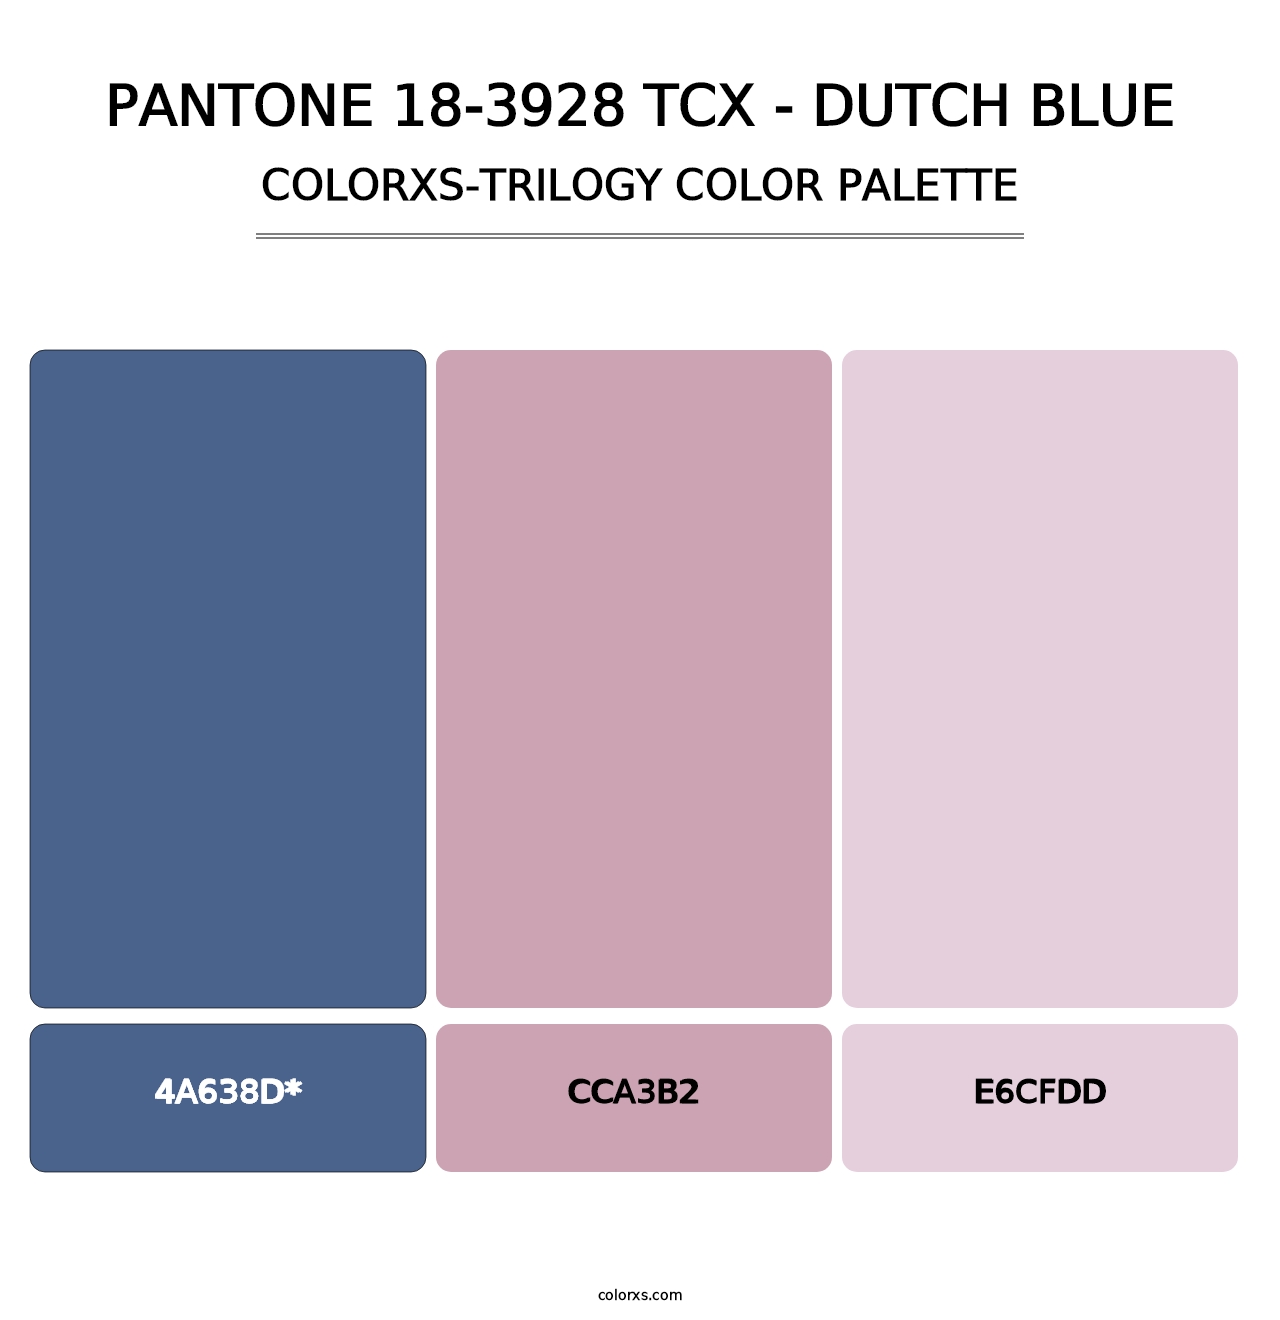 PANTONE 18-3928 TCX - Dutch Blue - Colorxs Trilogy Palette